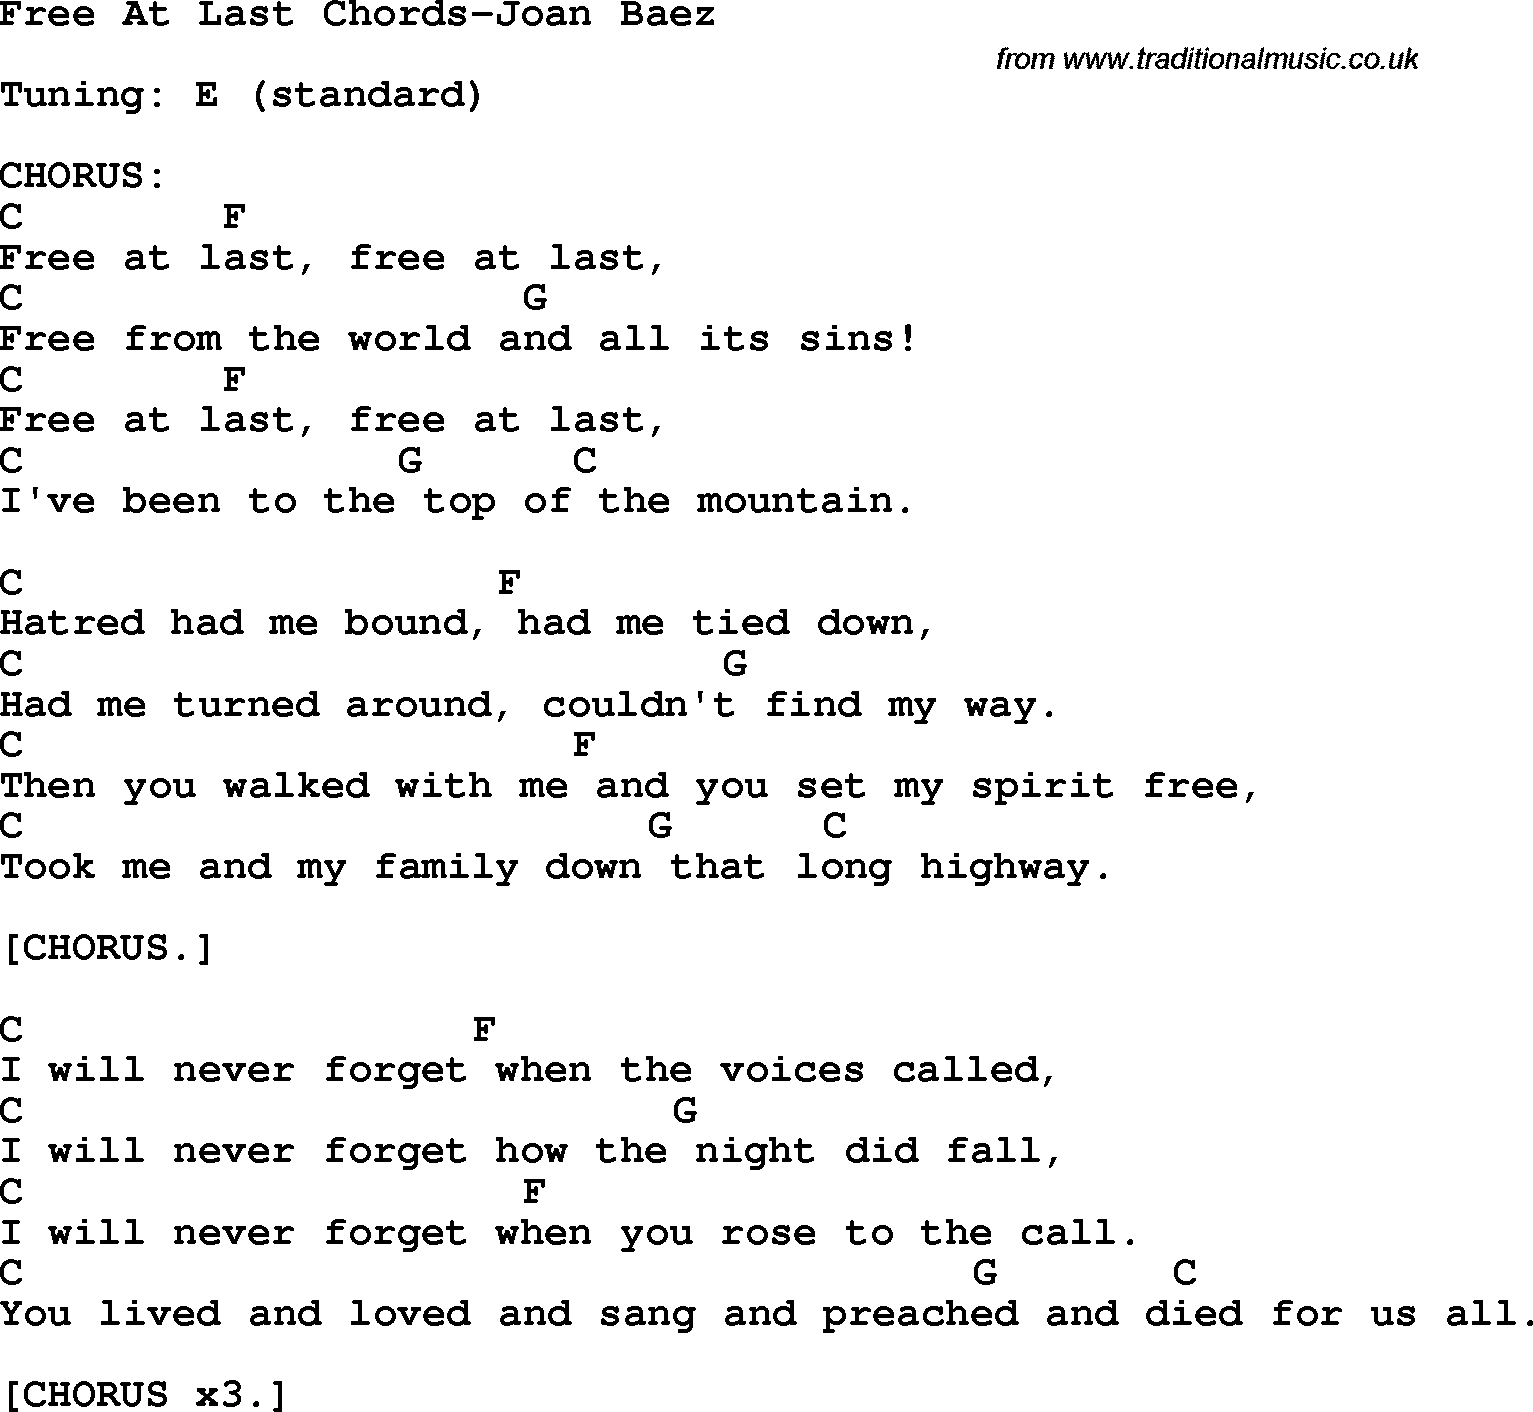 Protest Song Free At Last Chords-Joan Baez lyrics and chords